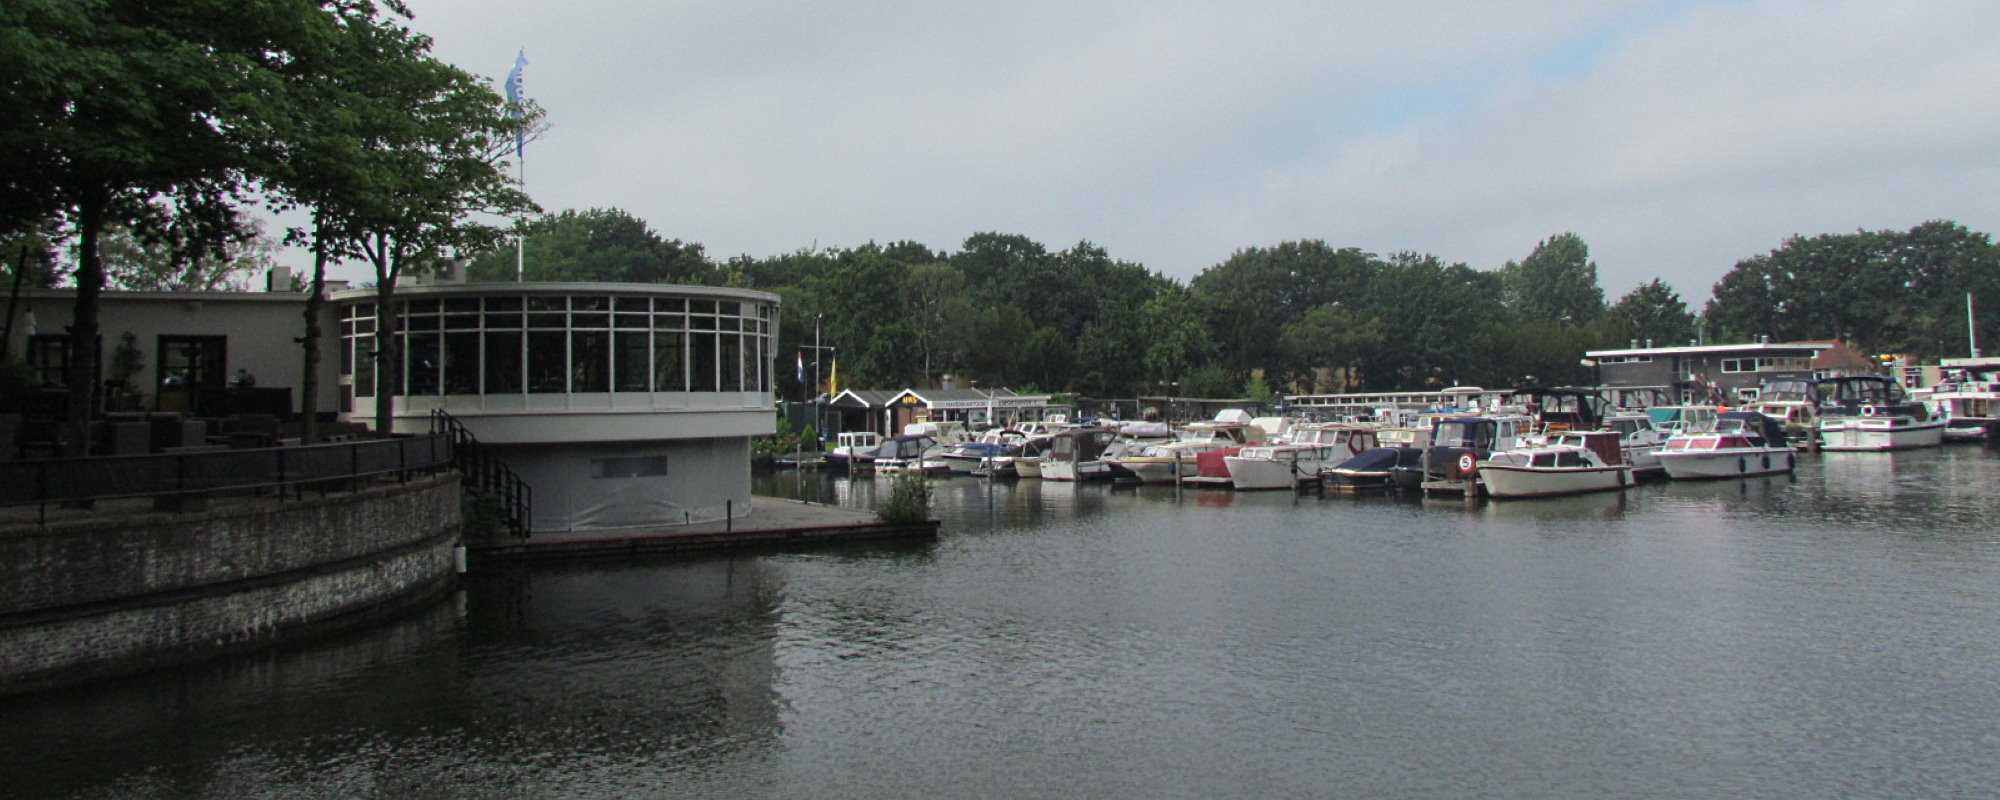 Hilversumse Watersport Vereniging De Sporthaven